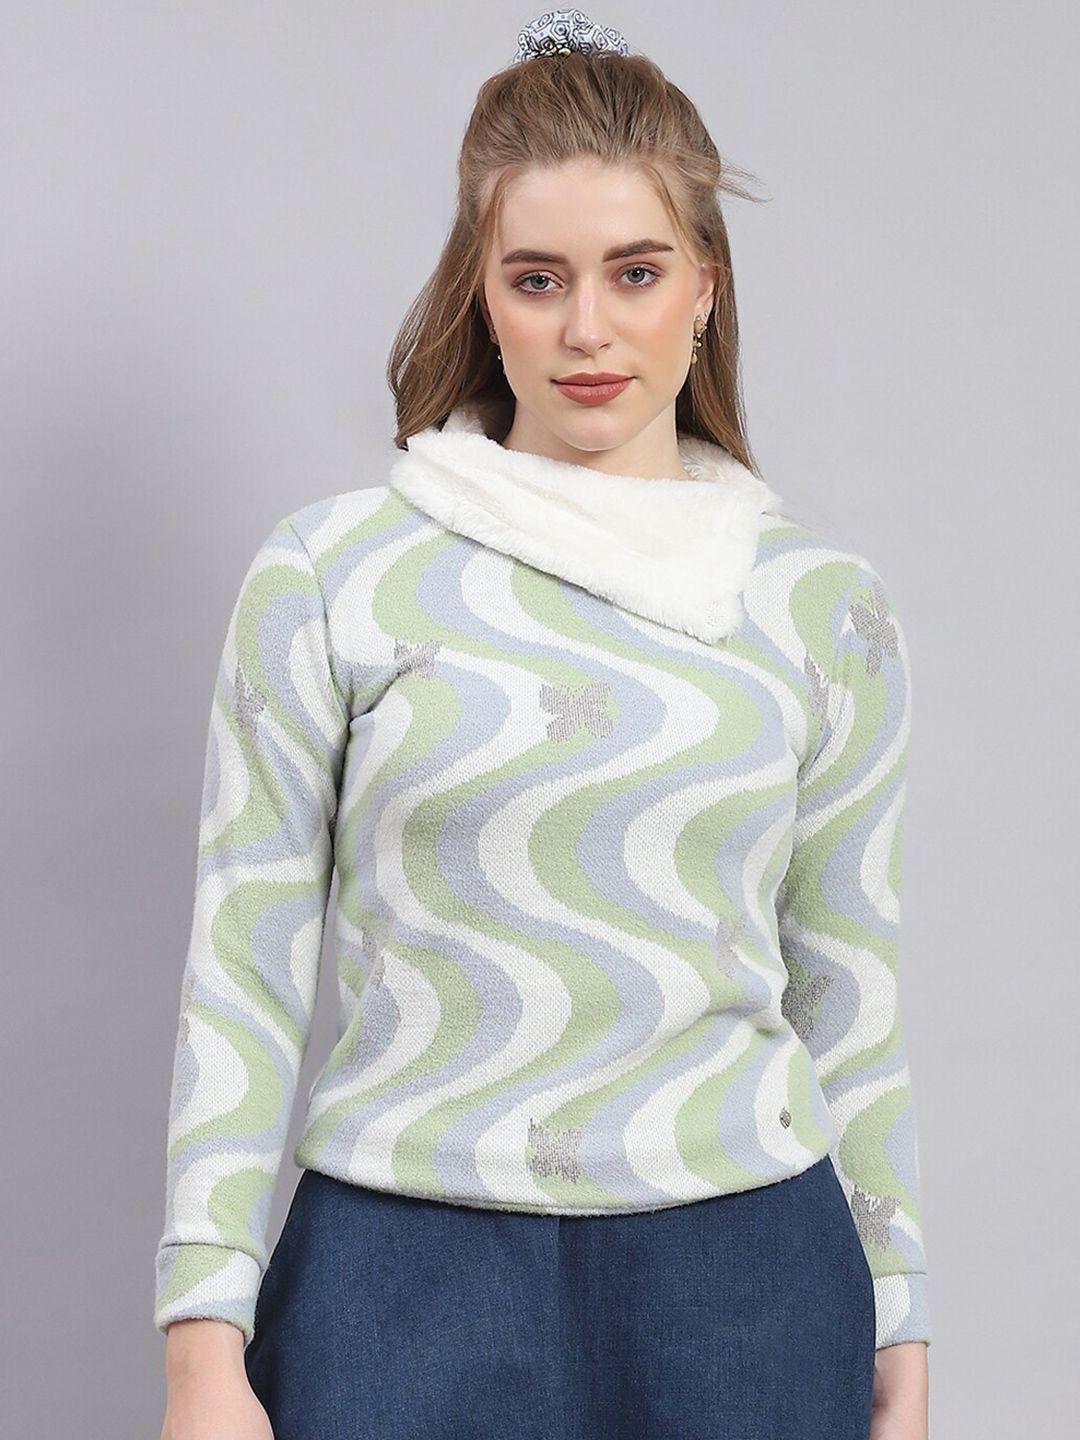 monte-carlo-abstract-printed-turtle-neck-sweatshirt